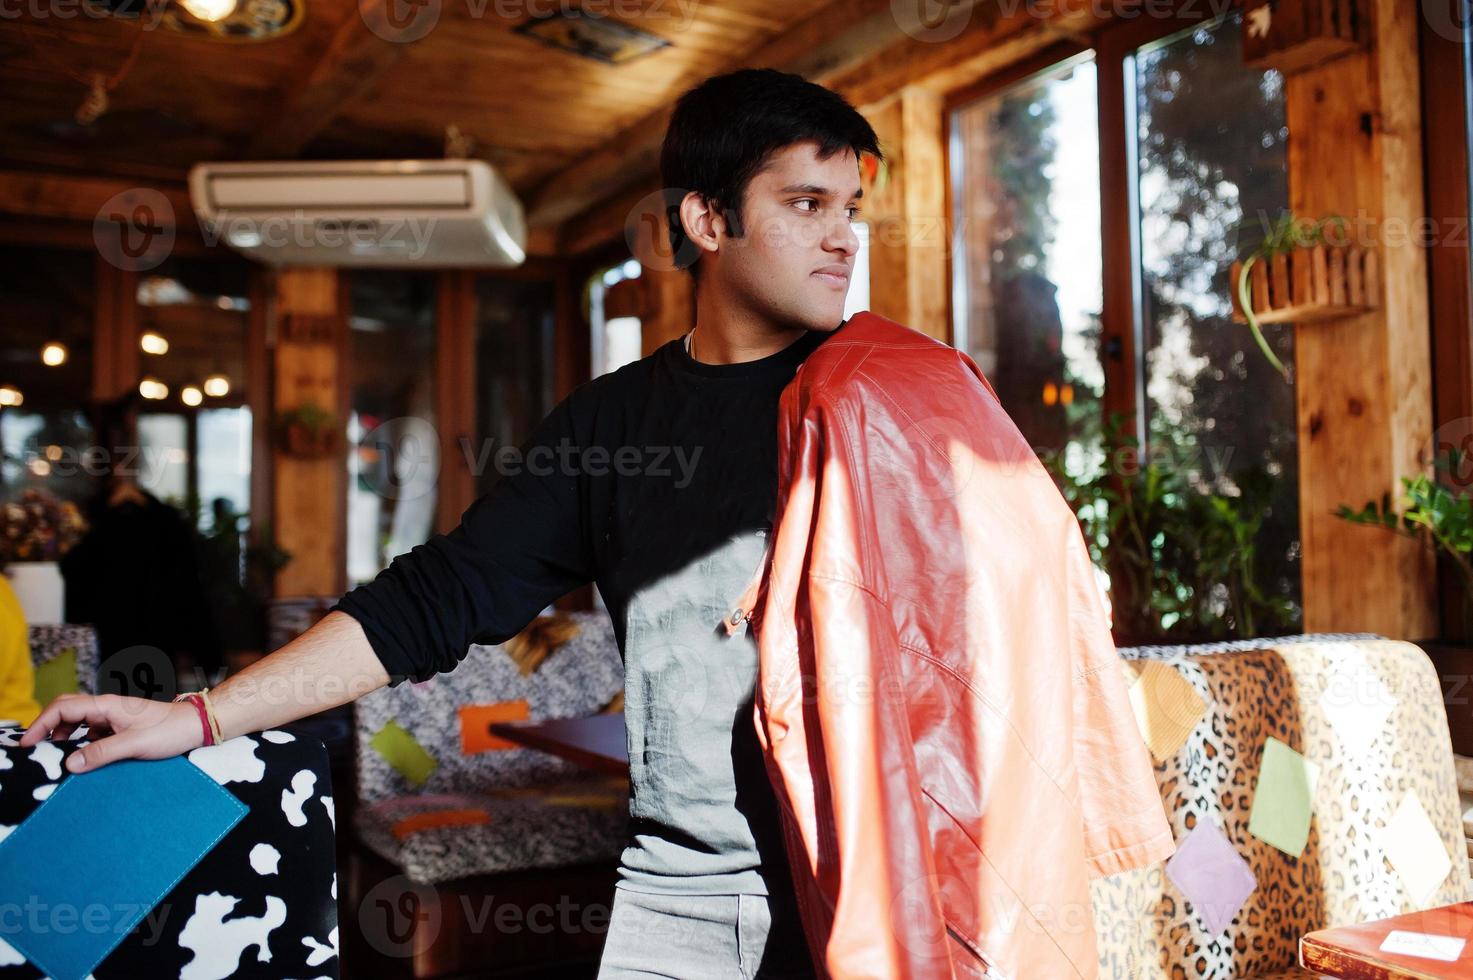 stijlvolle Indiase man in vrijetijdskleding poseren indoor café. foto